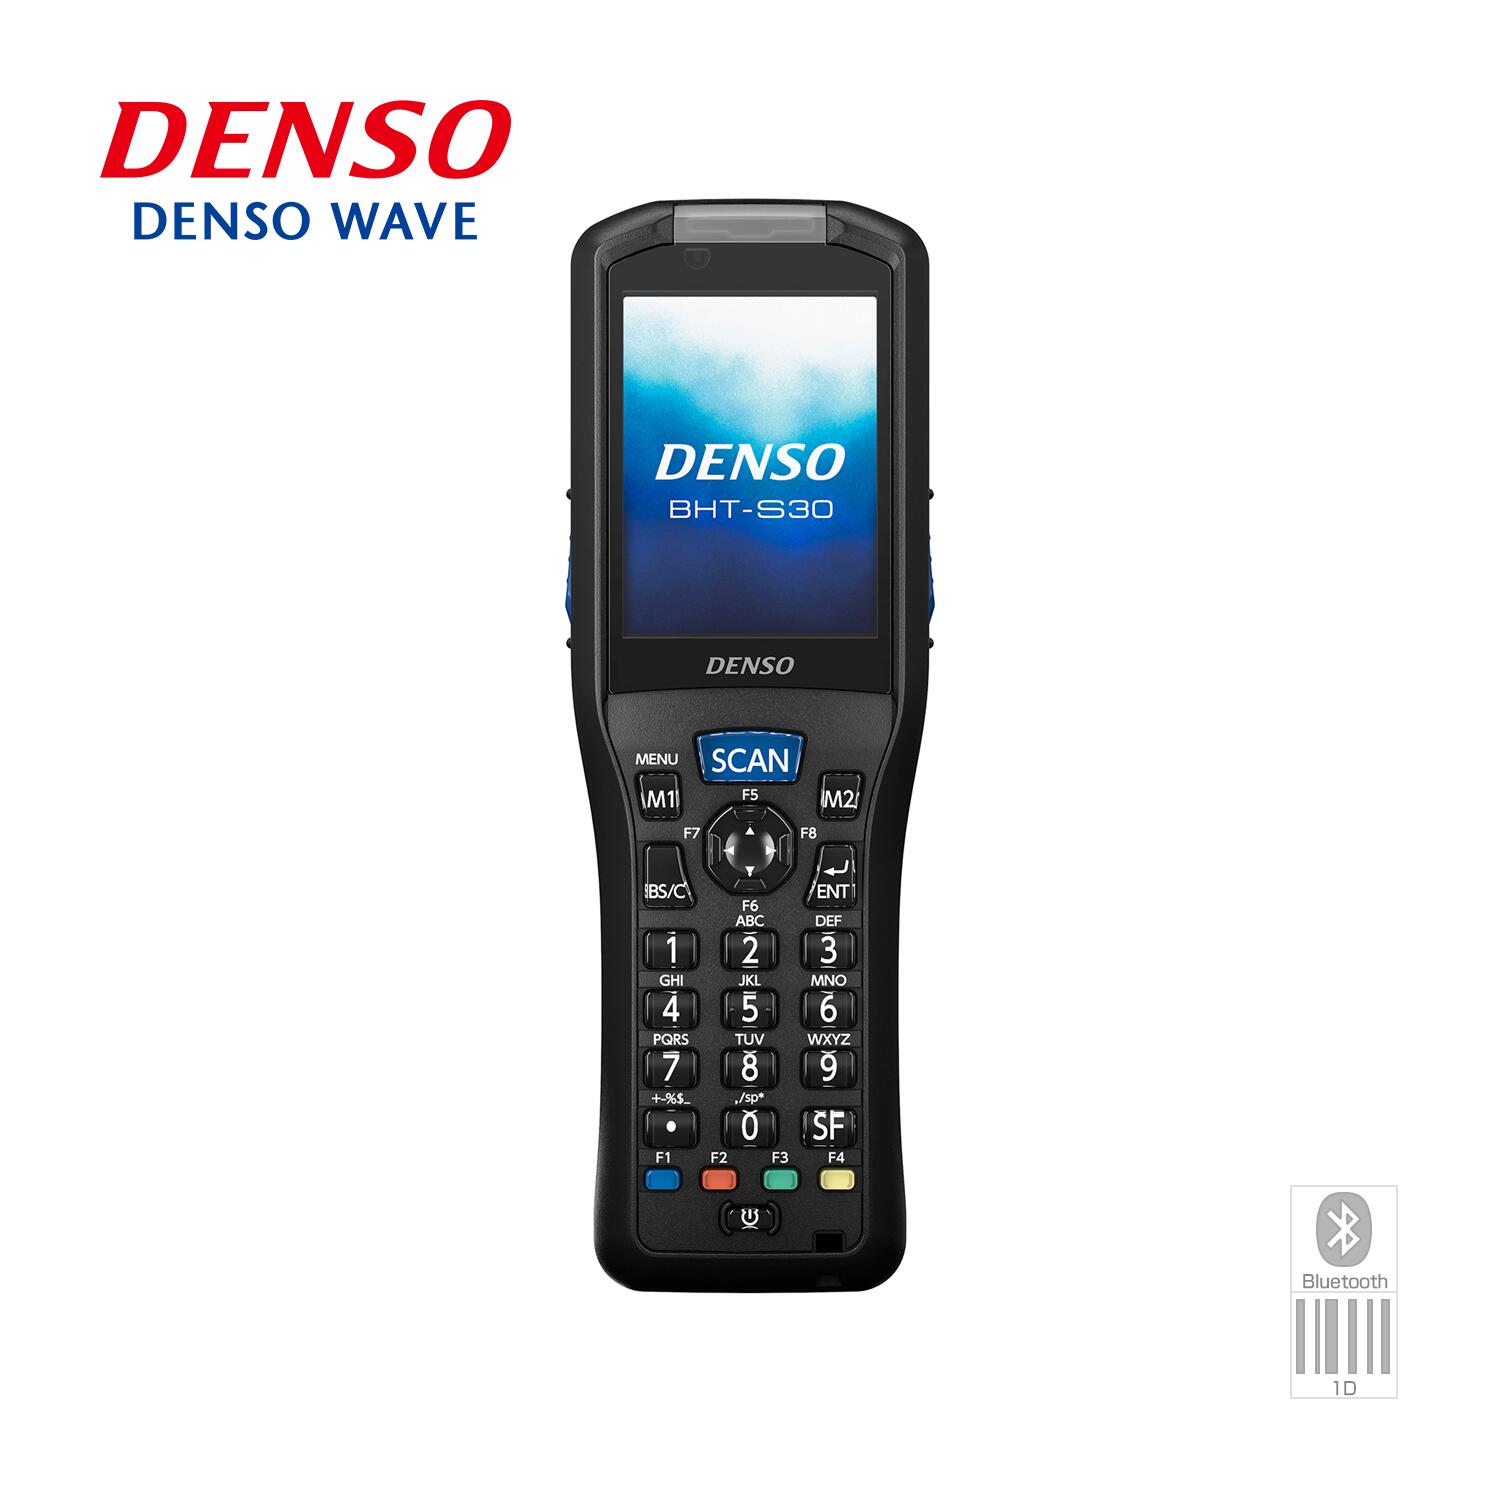 【DENSO】DENSO BHT-S30シリーズ BHT-S30-B Bluetoothモデル BHT-OS搭載 DENSO WAVE【代引手数料無料】♪